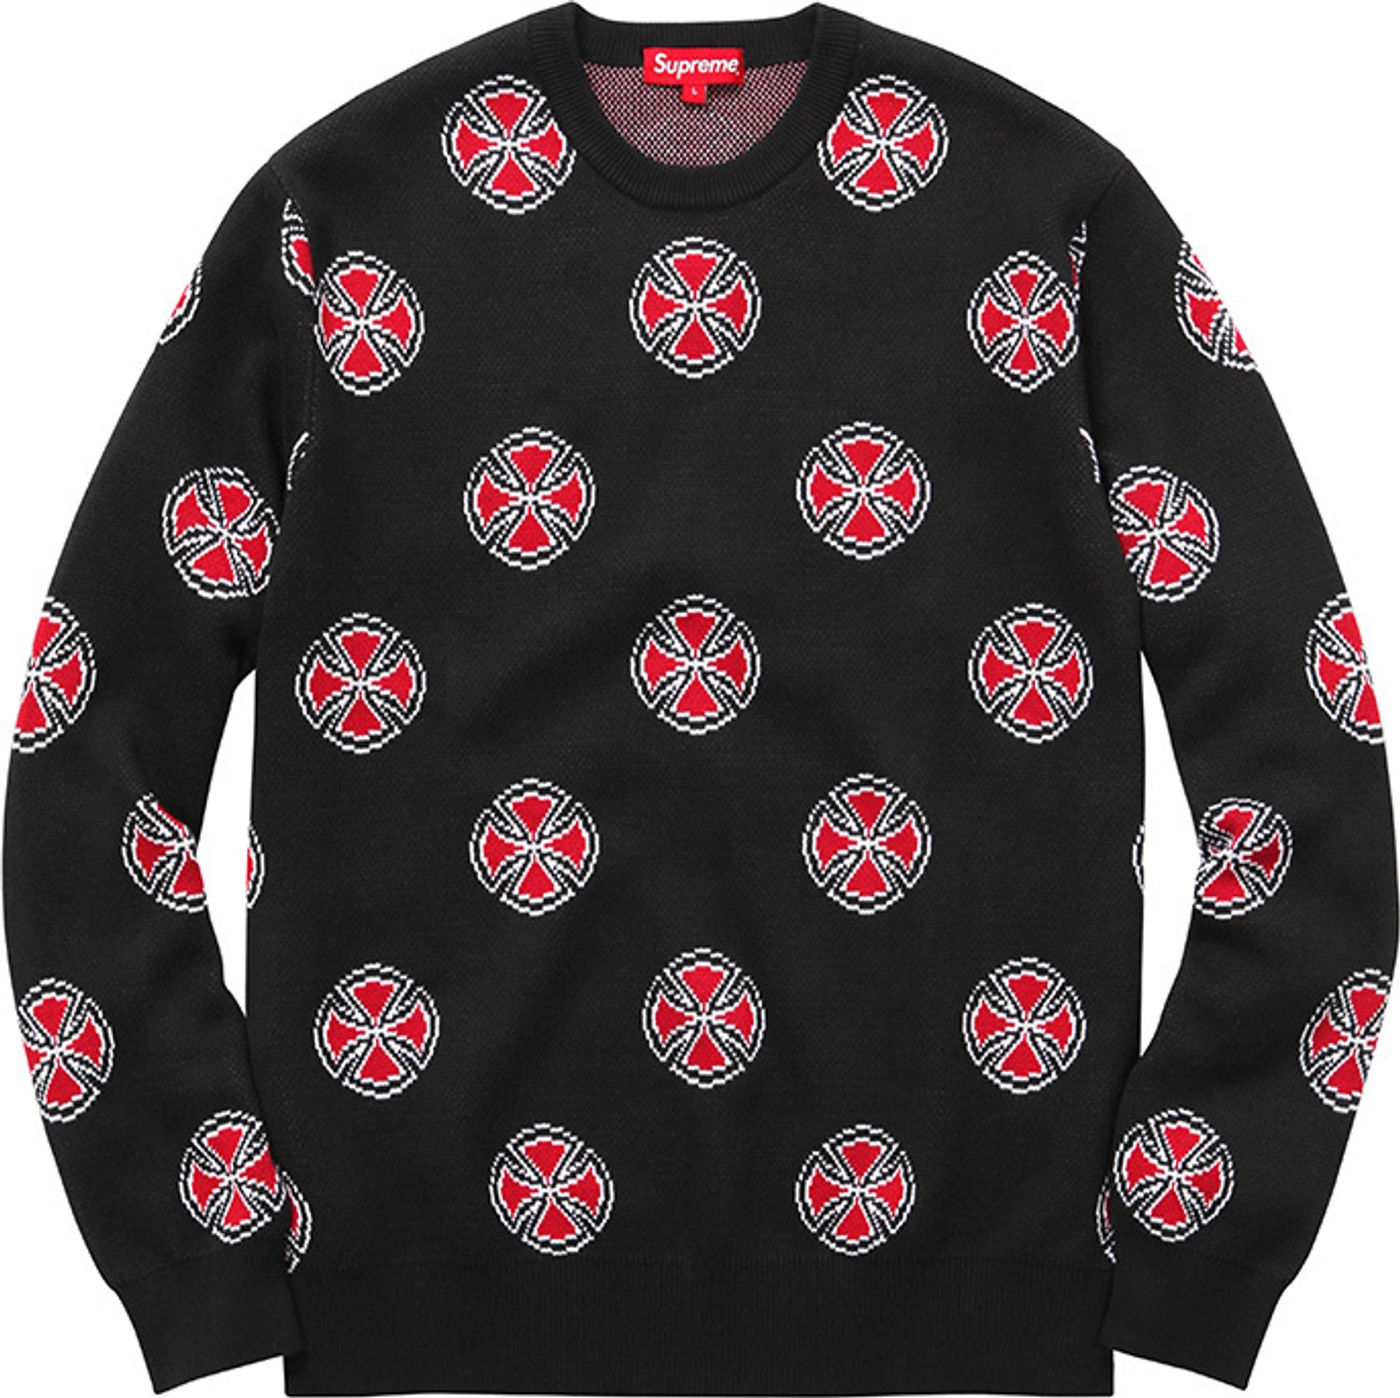 Crosses Sweater (9/18)